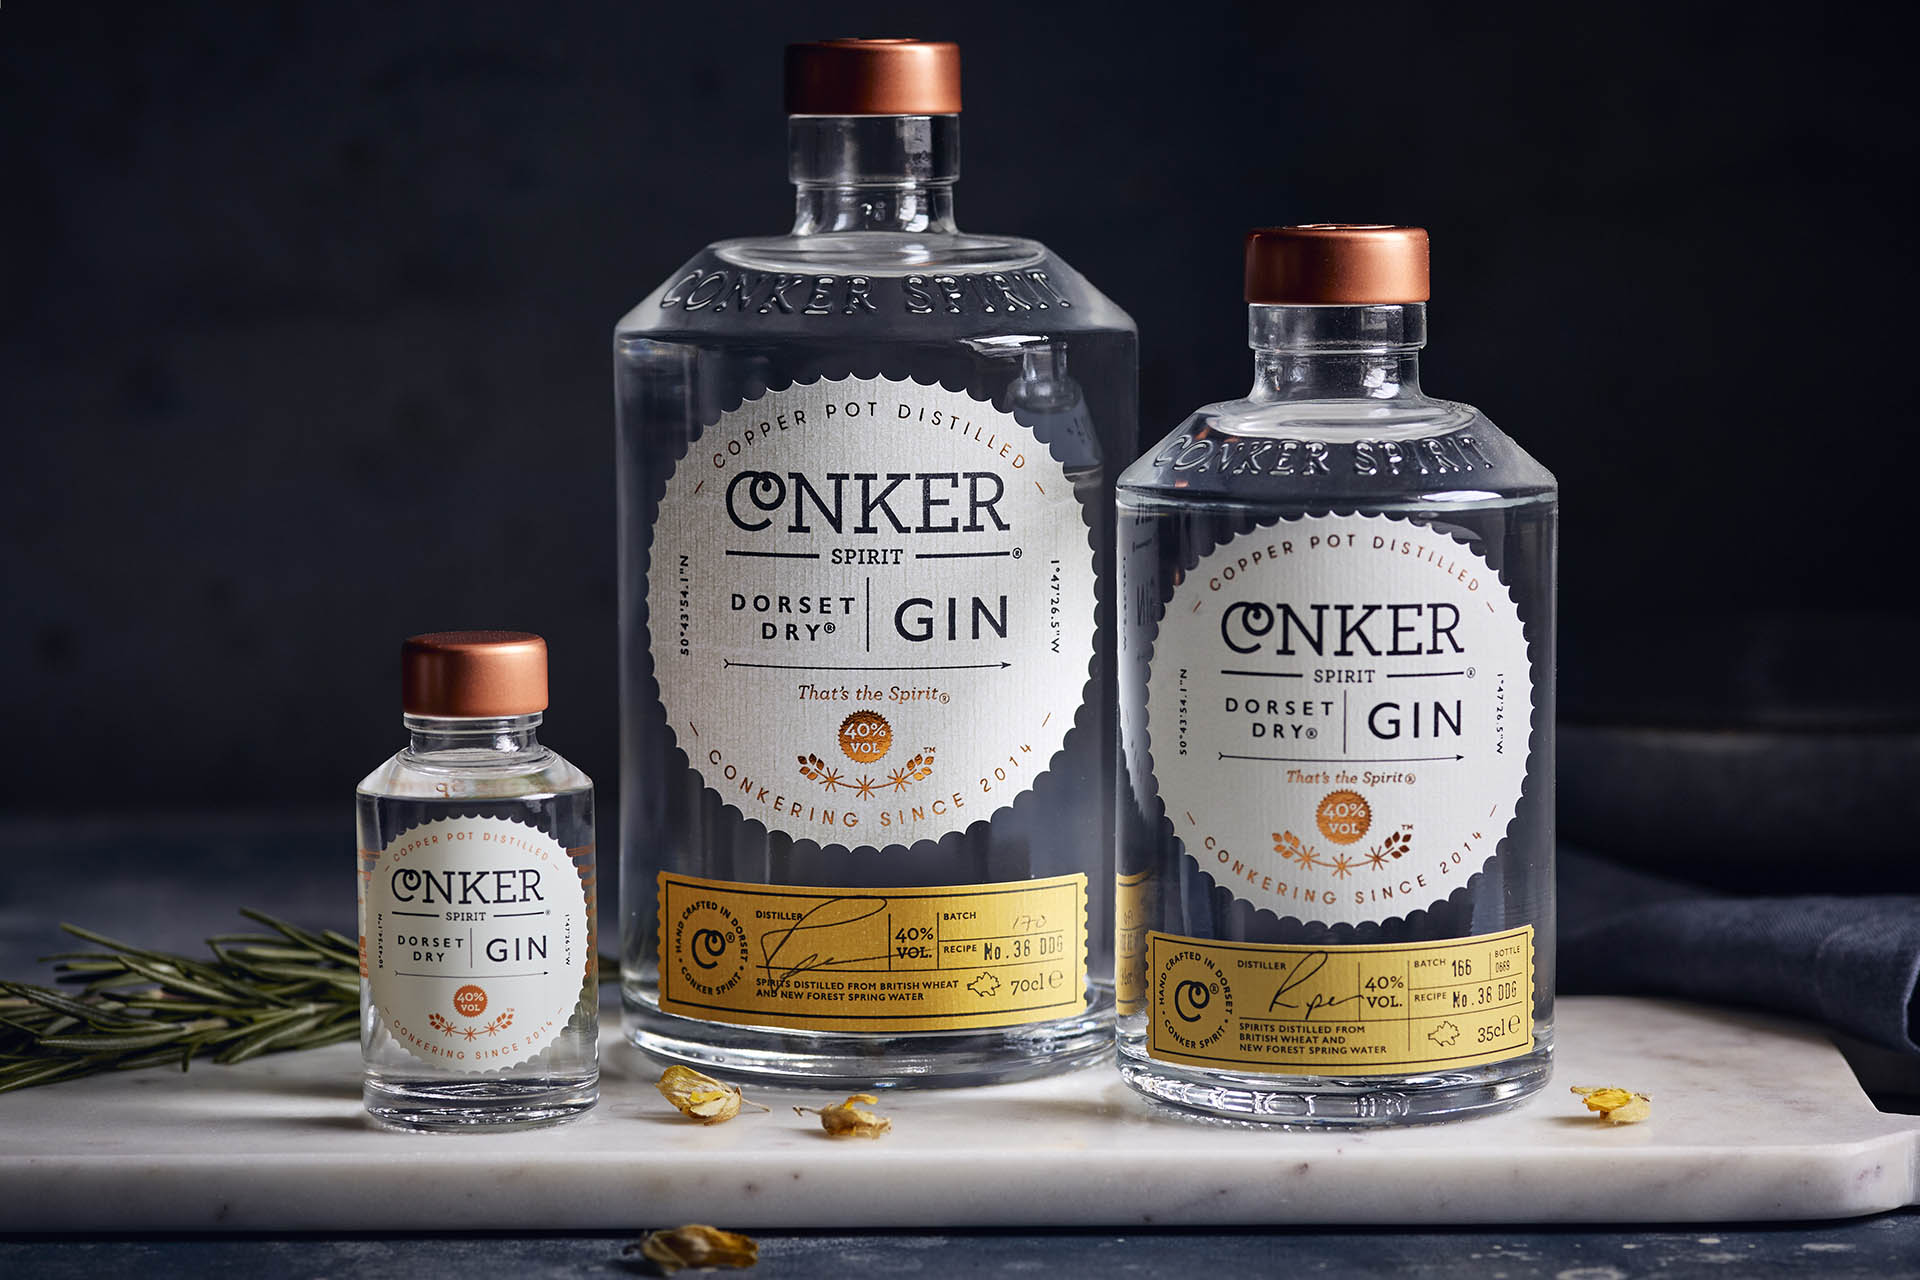 conker spirit Dorset gin product photography